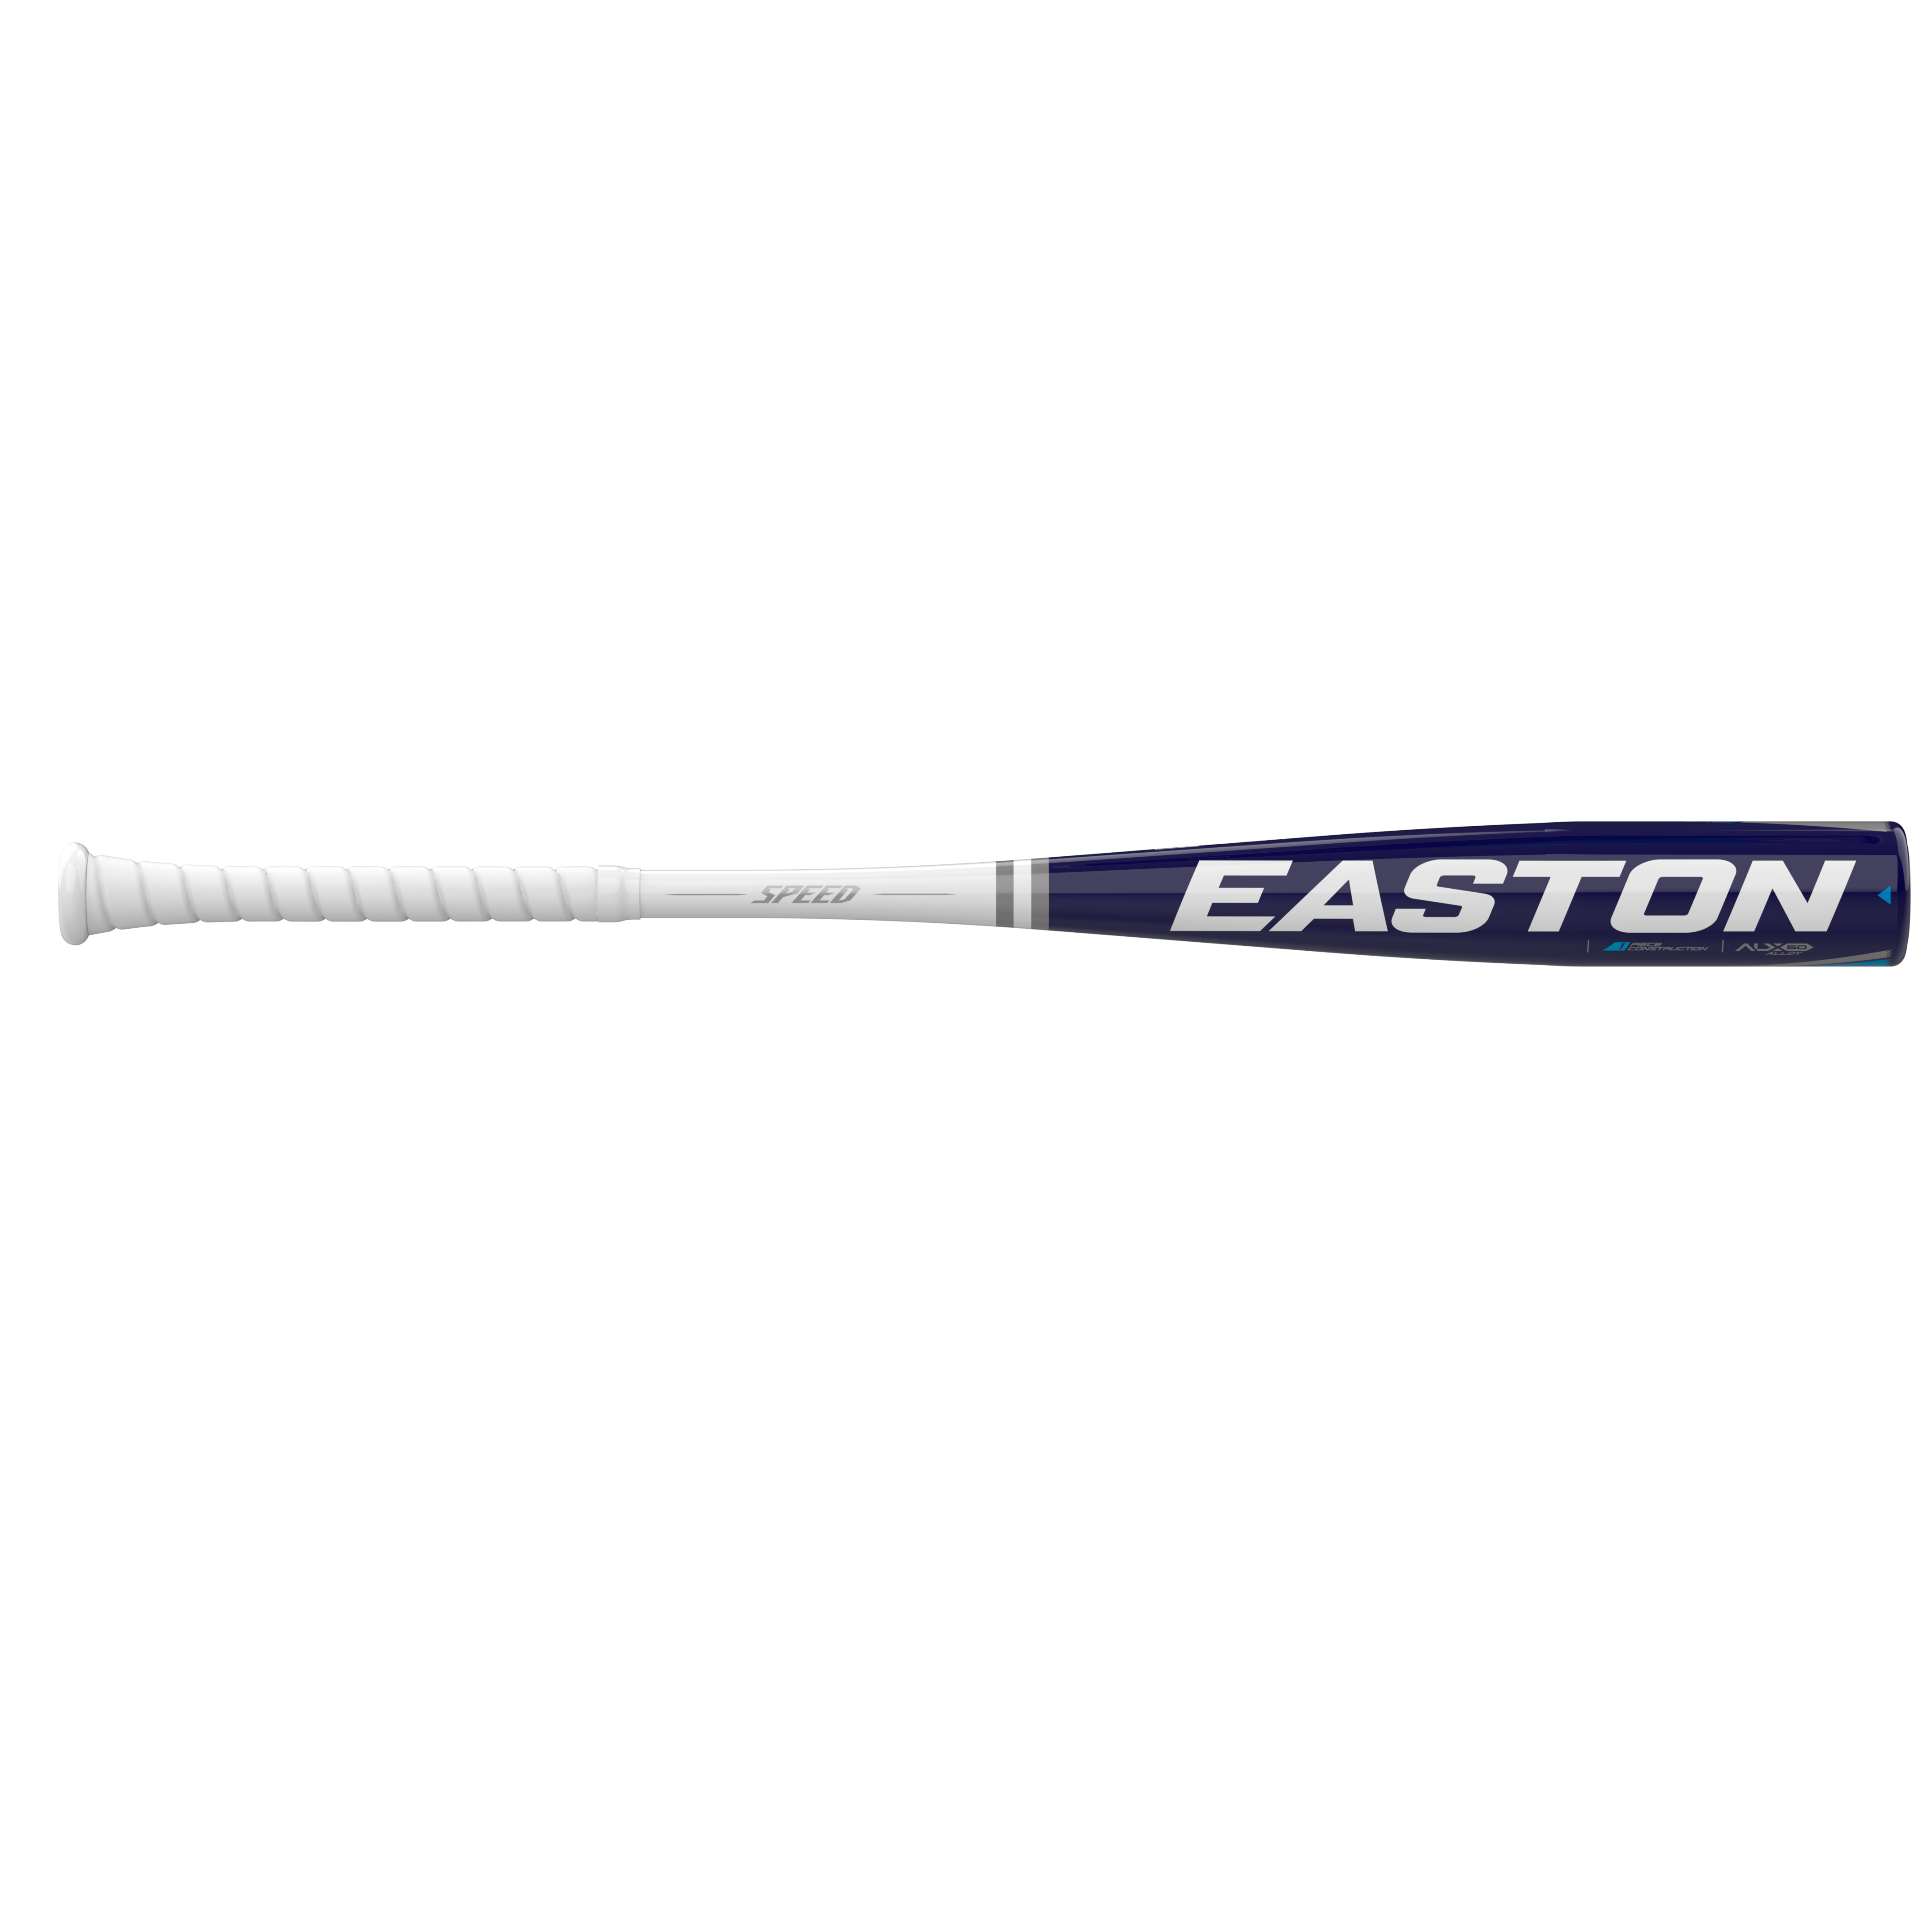 Easton 2022 Speed BBCOR Baseball Bat